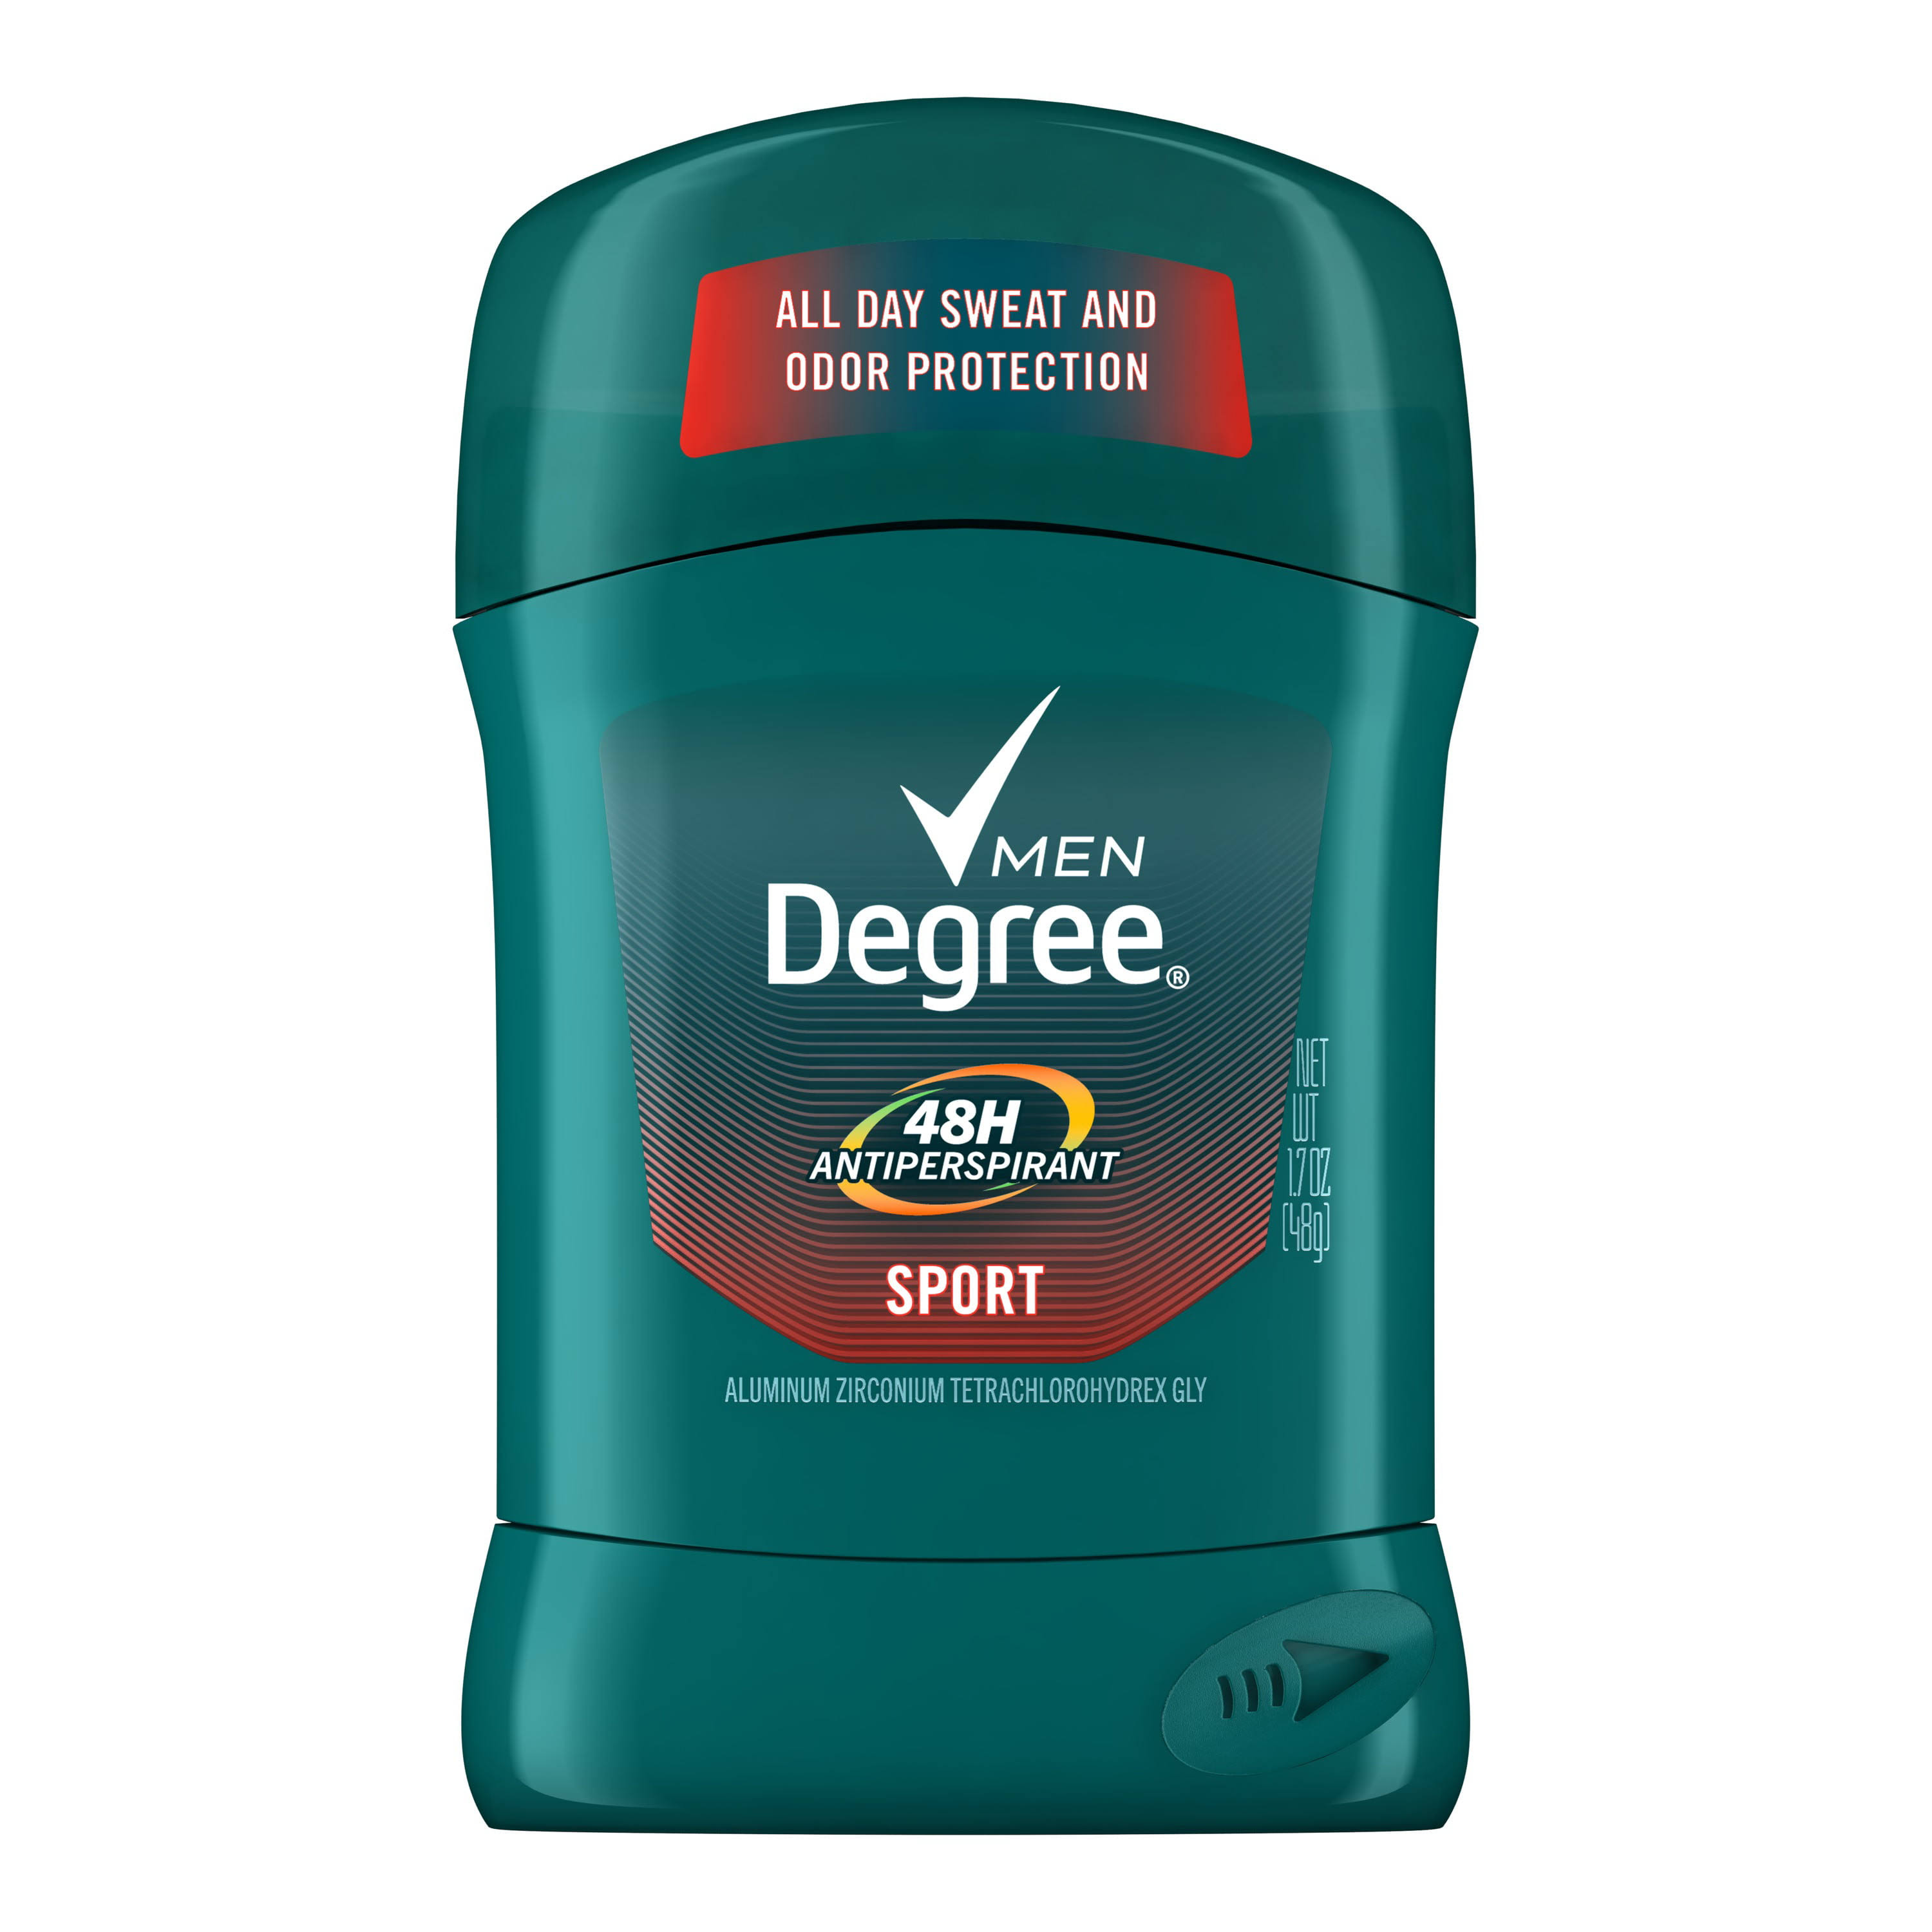 Degree Men Dry Protection Antiperspirant Deodorant - Sport, 1.7oz